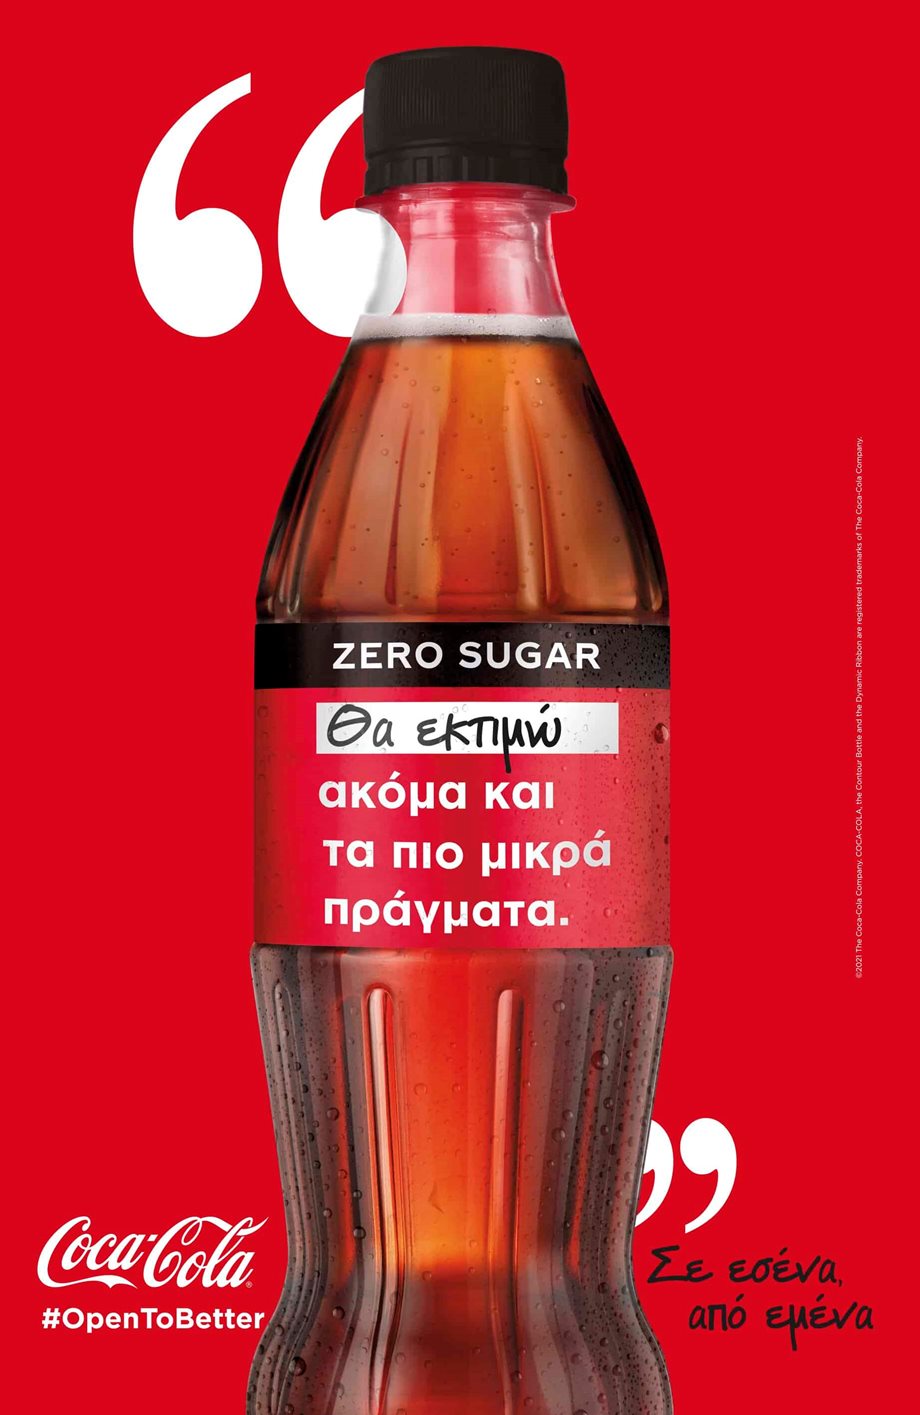 Coca-Cola: Νέο έτος, νέα ευκαιρία για να γίνουμε "ανοιχτοί προς το καλύτερο"